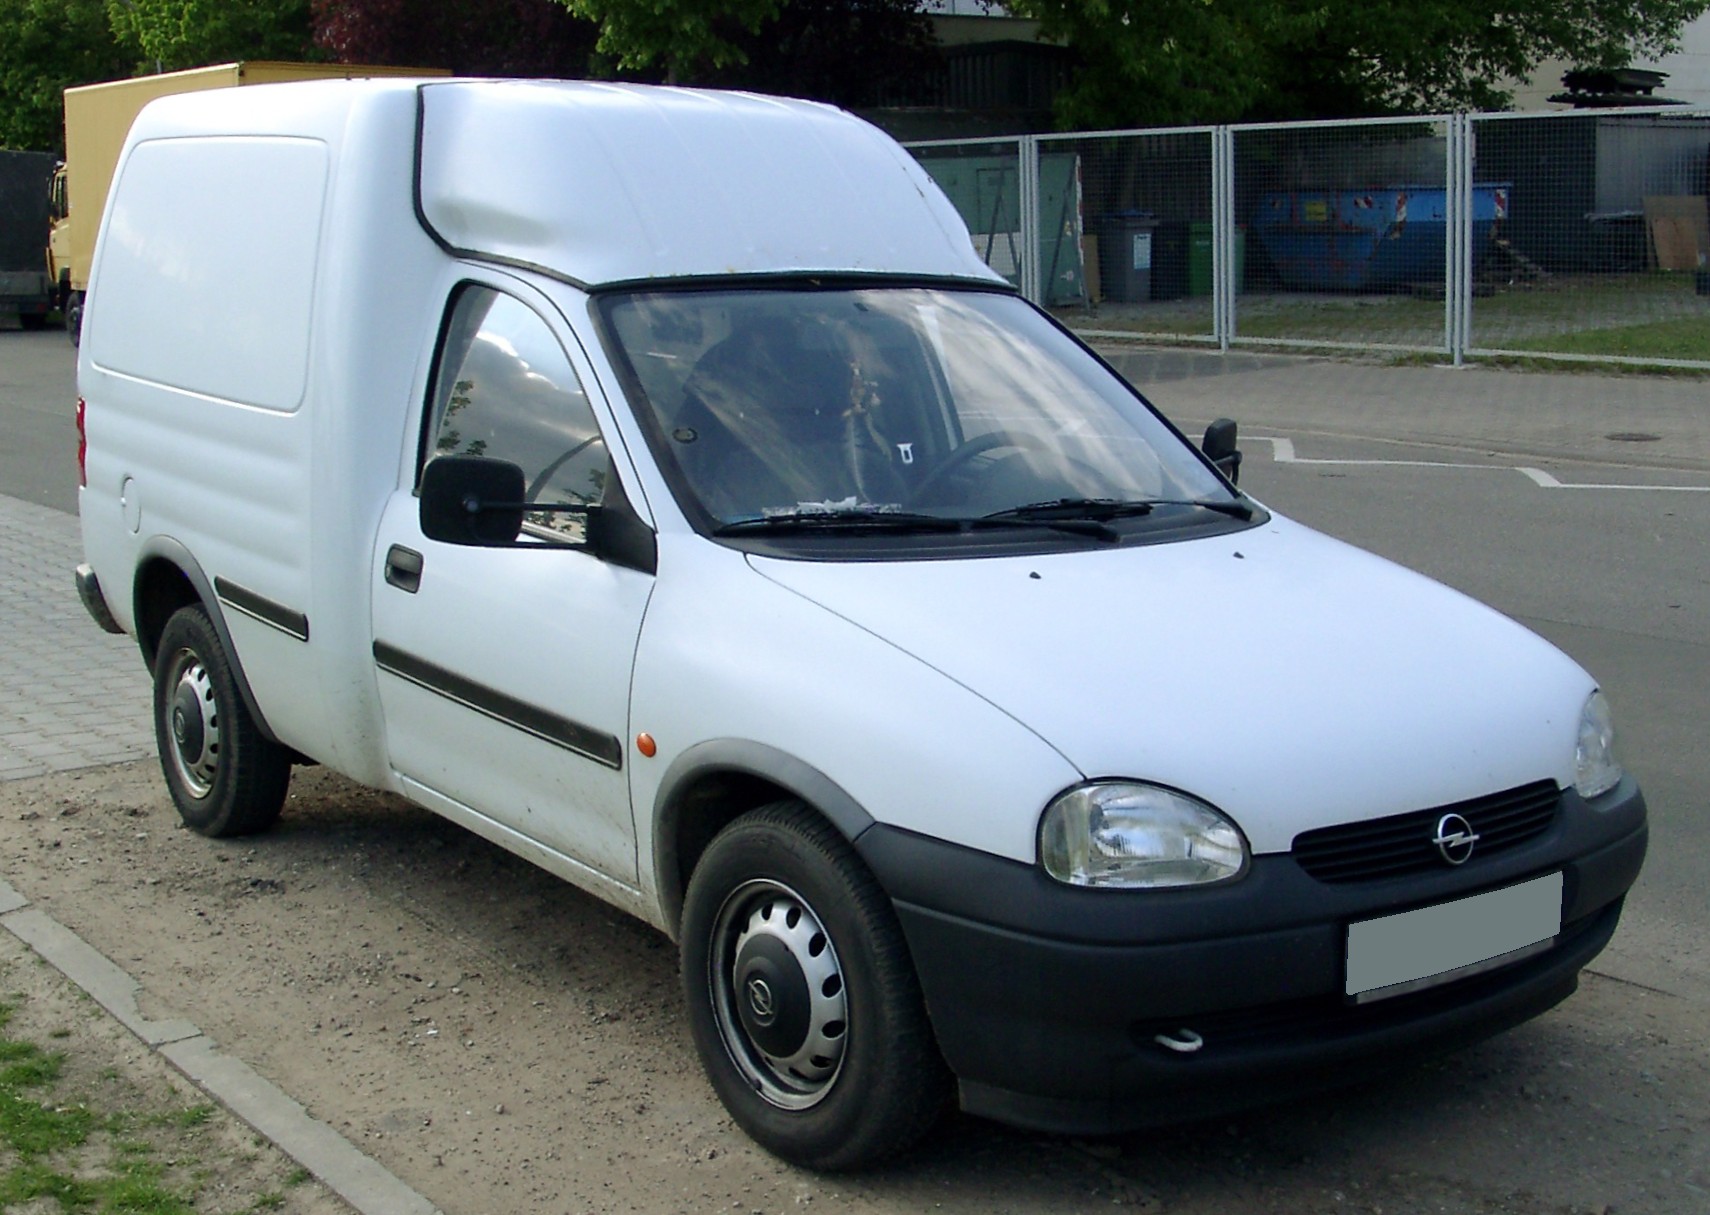 File:Opel Combo front 20080625.jpg